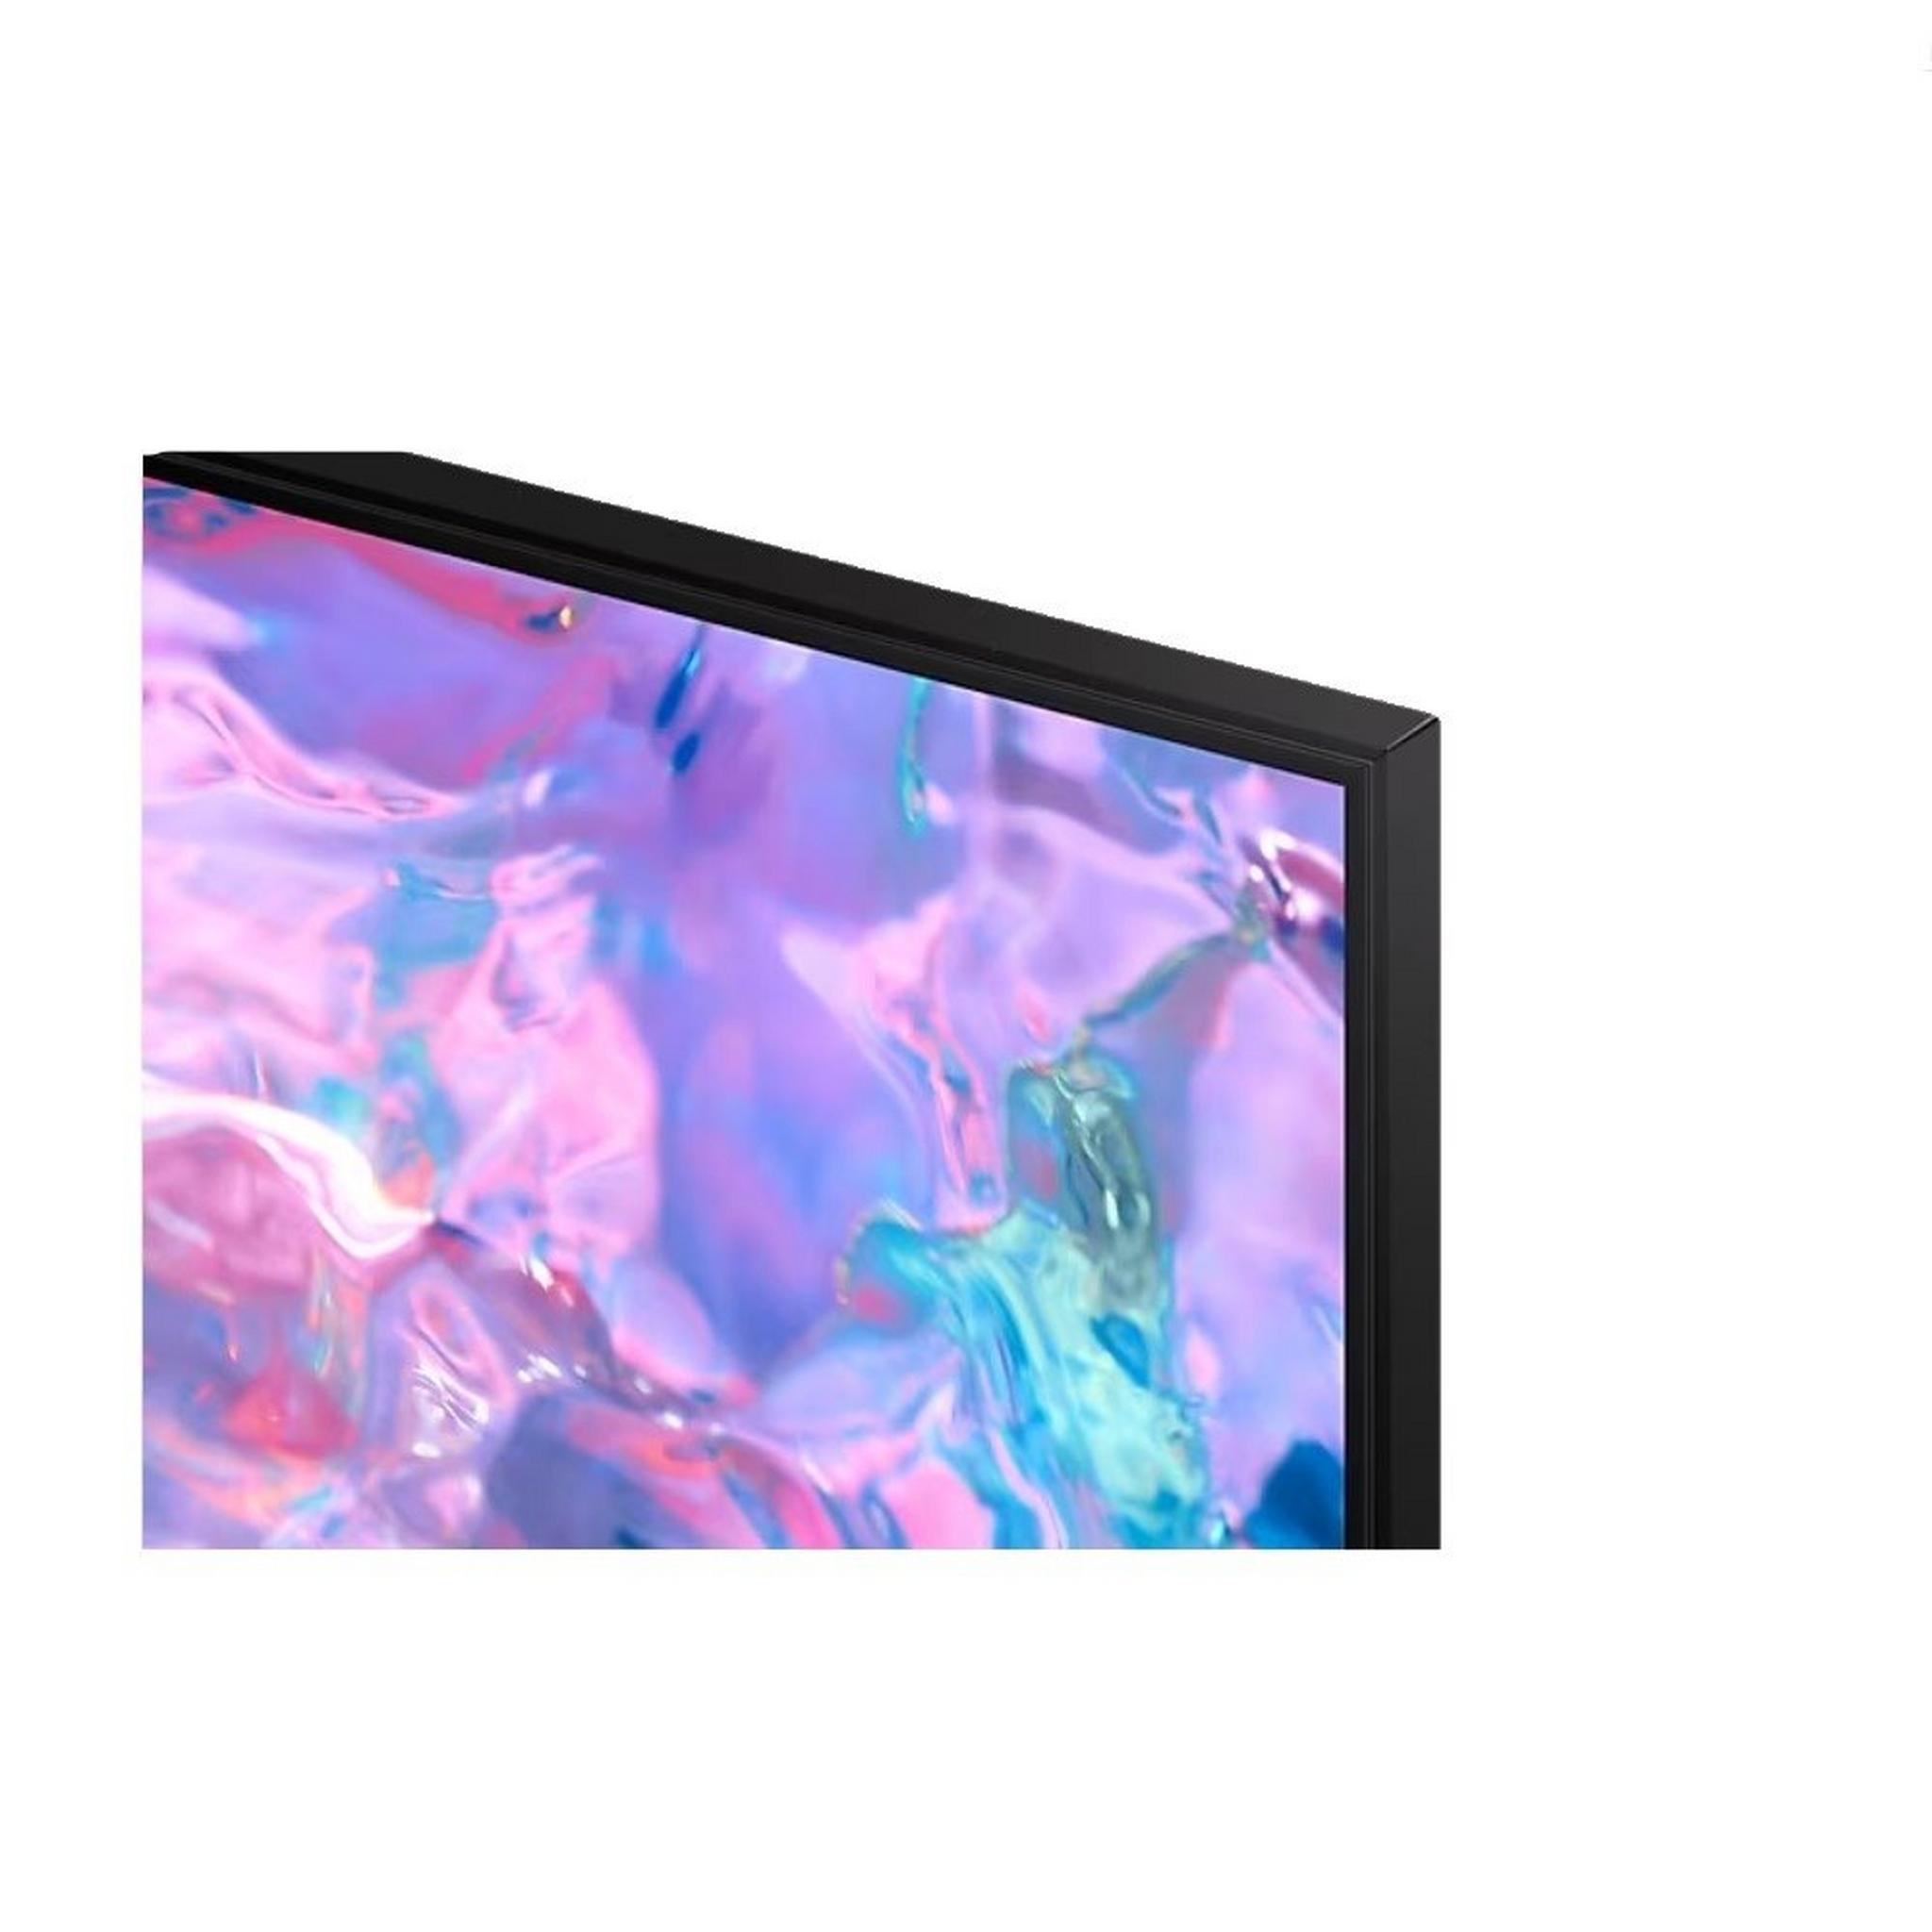 SAMSUNG 50-inch 4K UHD LED Smart TV, UA50CU7000UXZN – Black